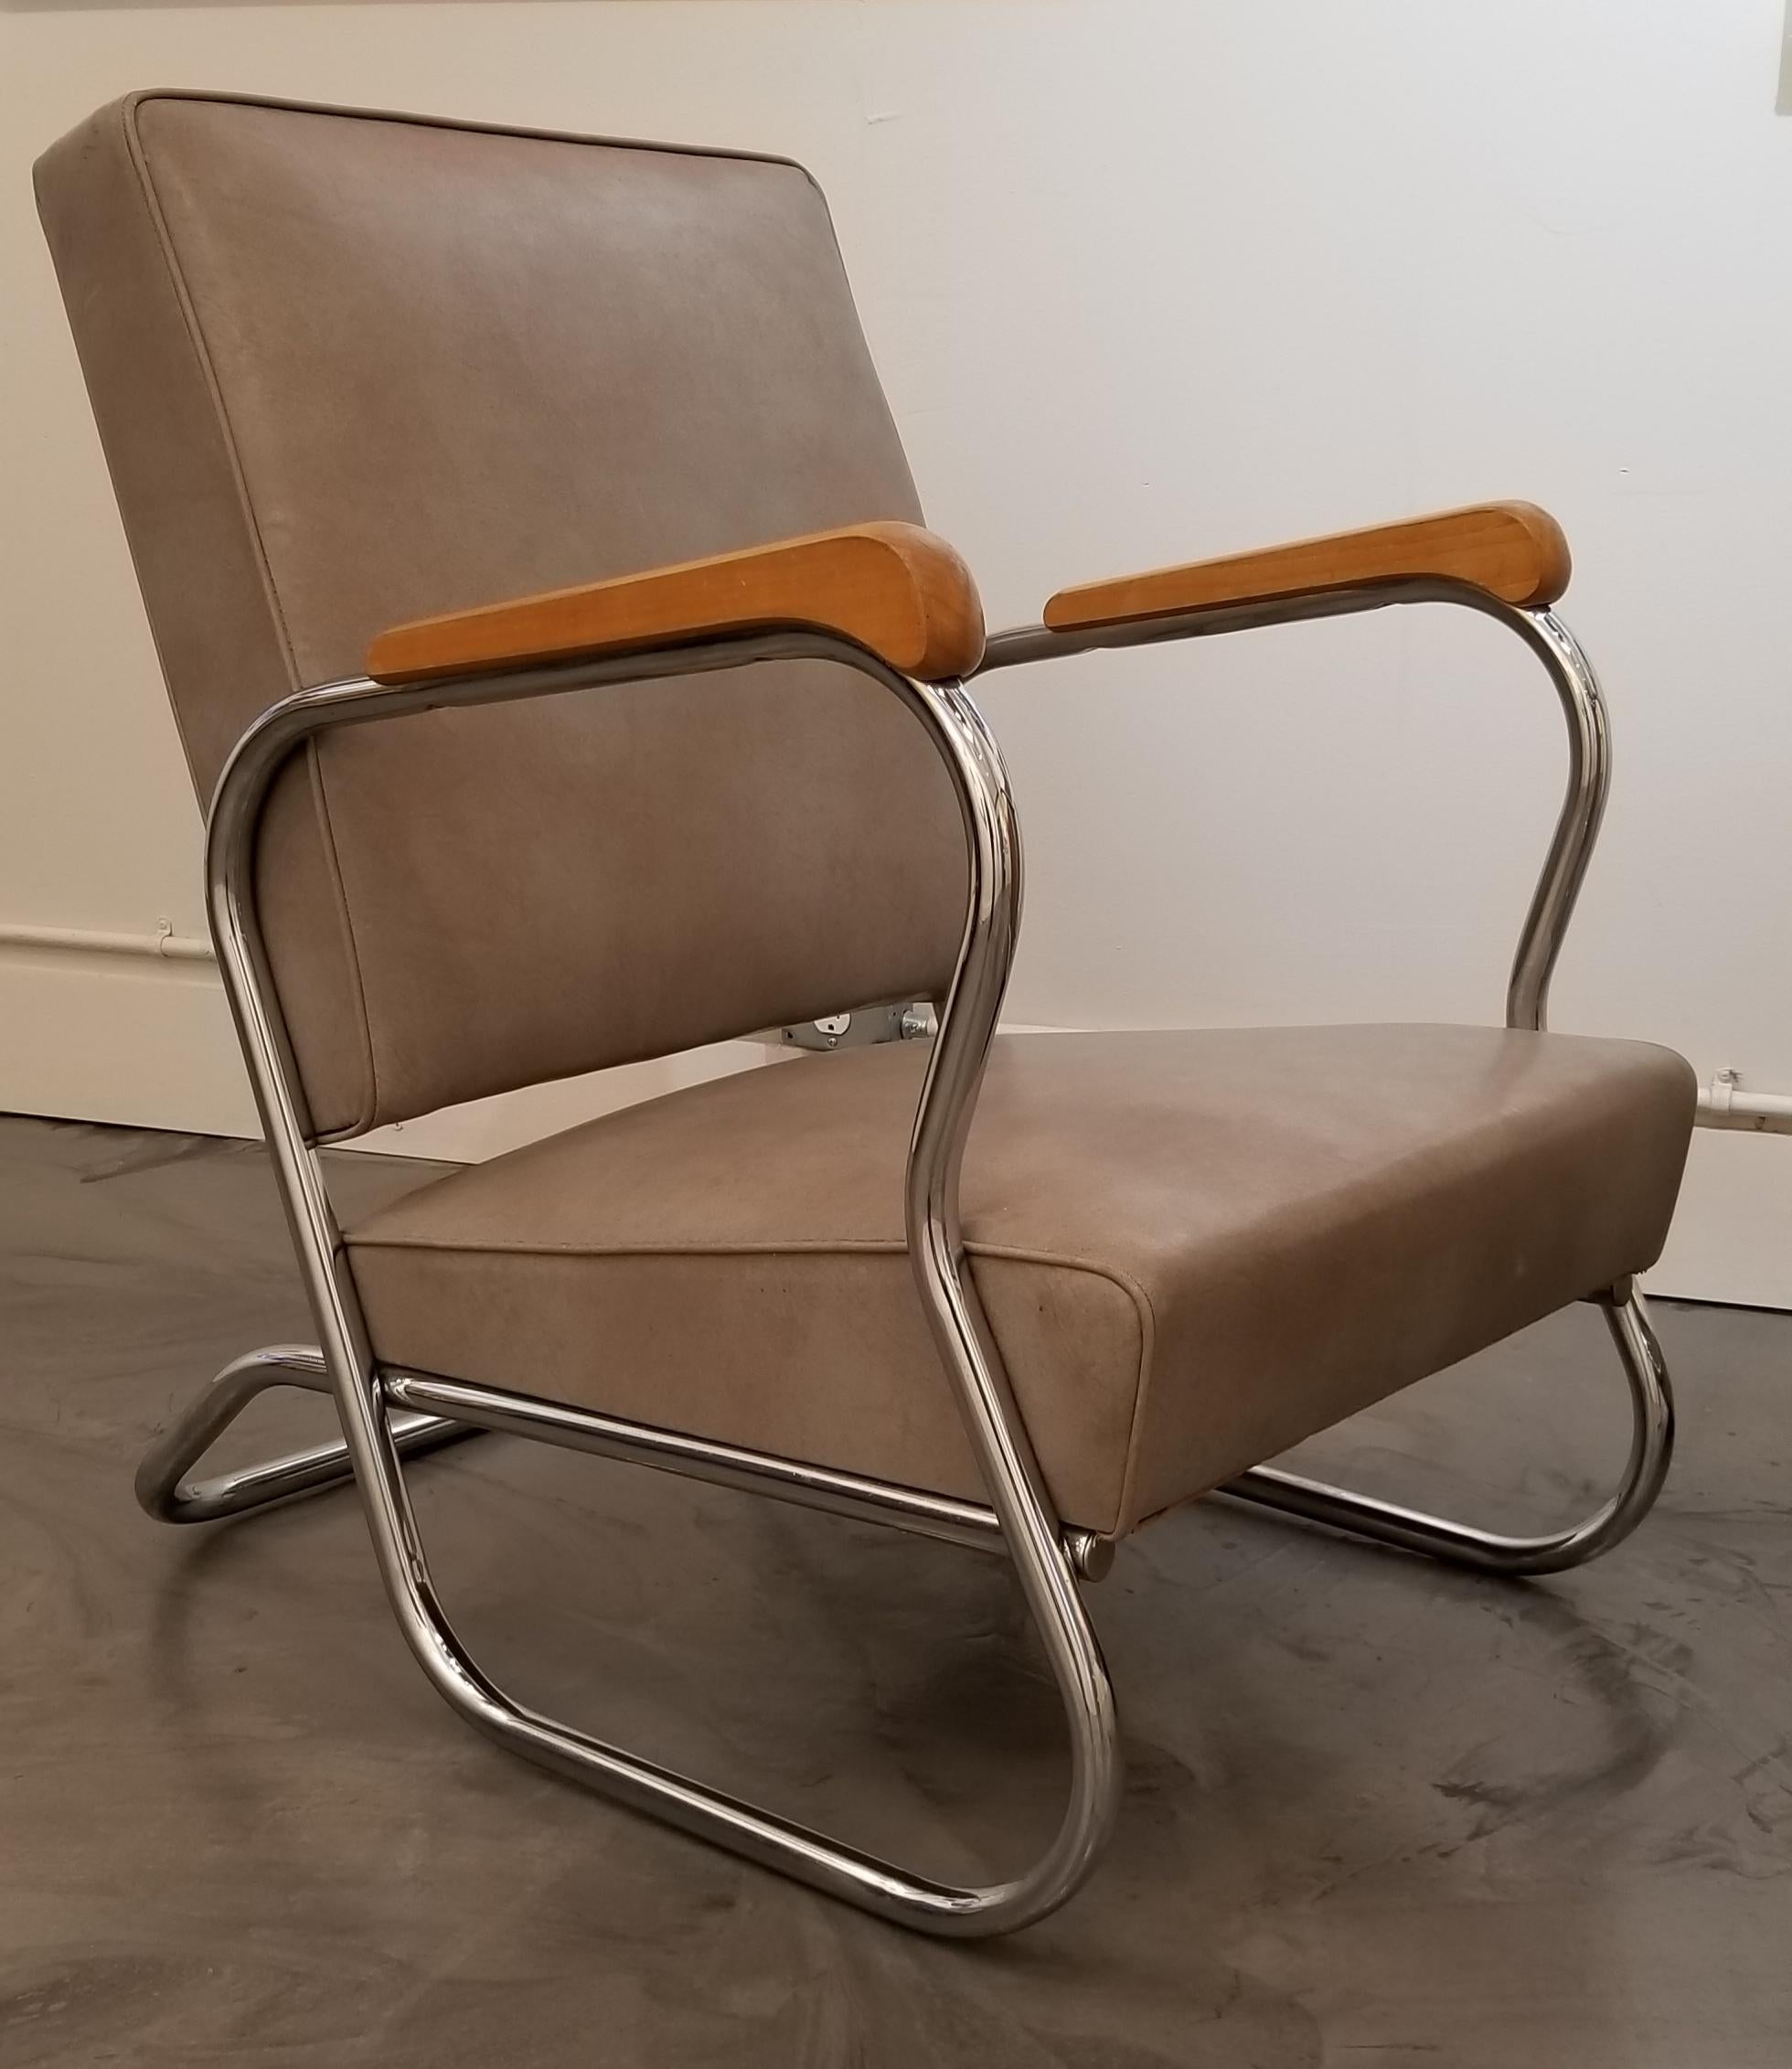 1930s Industrial Modern Chrome Club Chairs (Industriell)